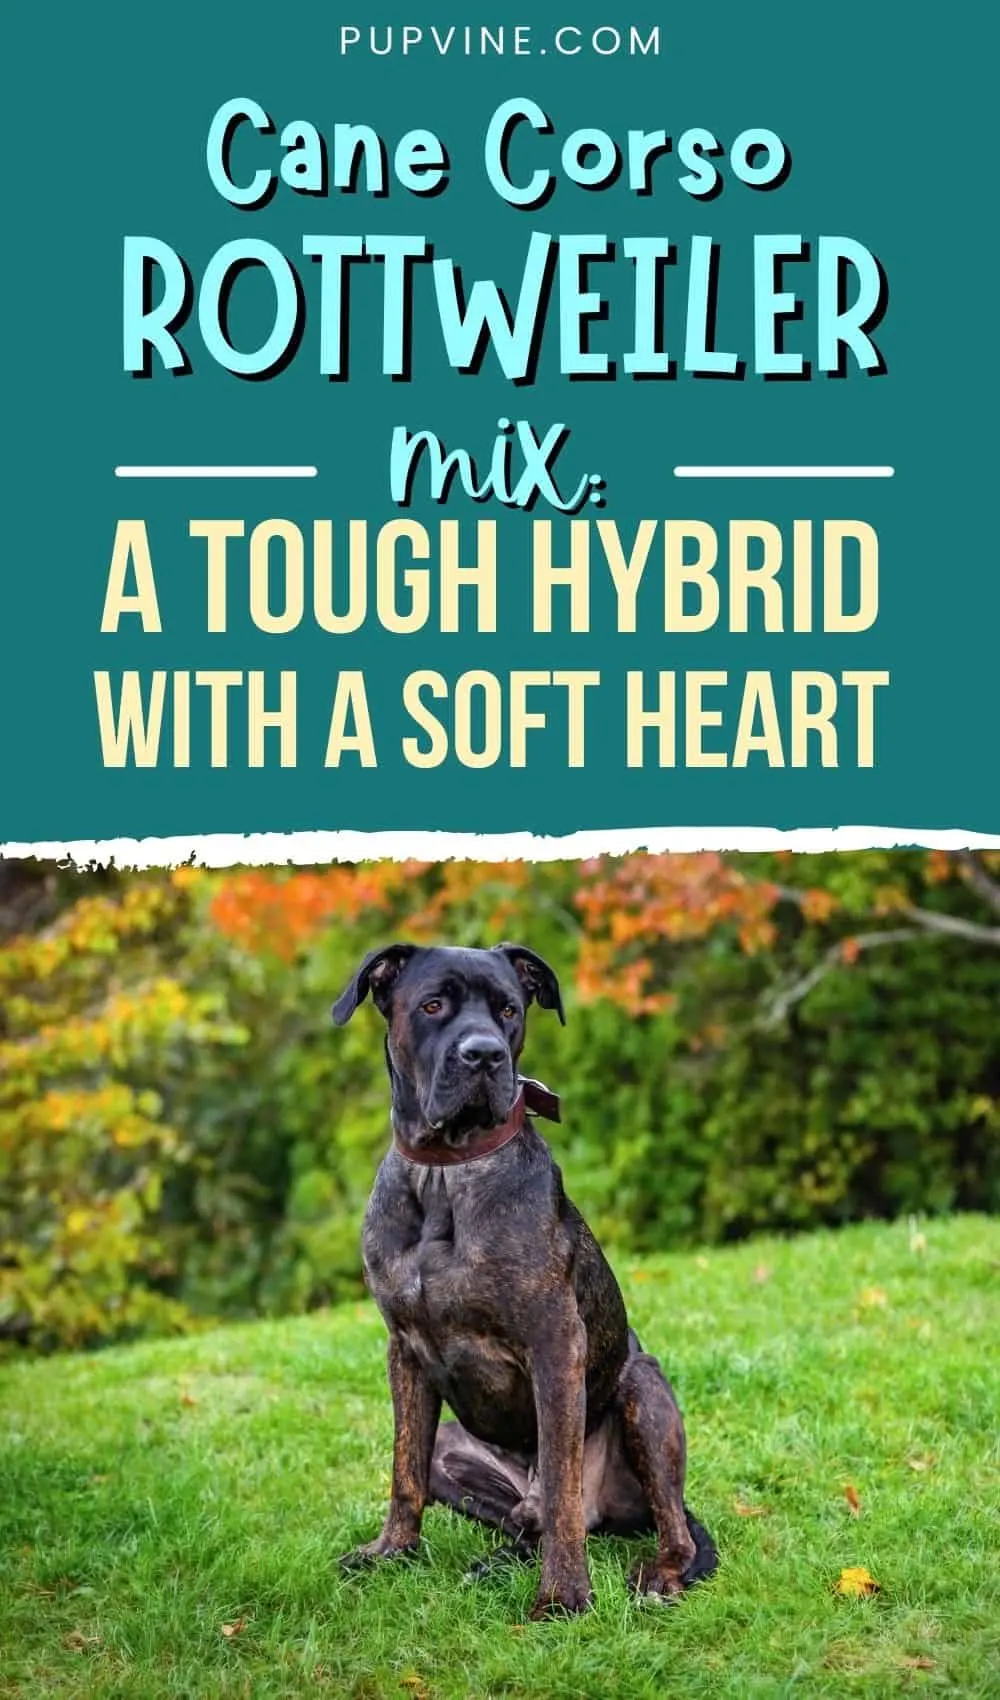 Cane Corso Rottweiler Mix: A Tough Hybrid With A Soft Heart